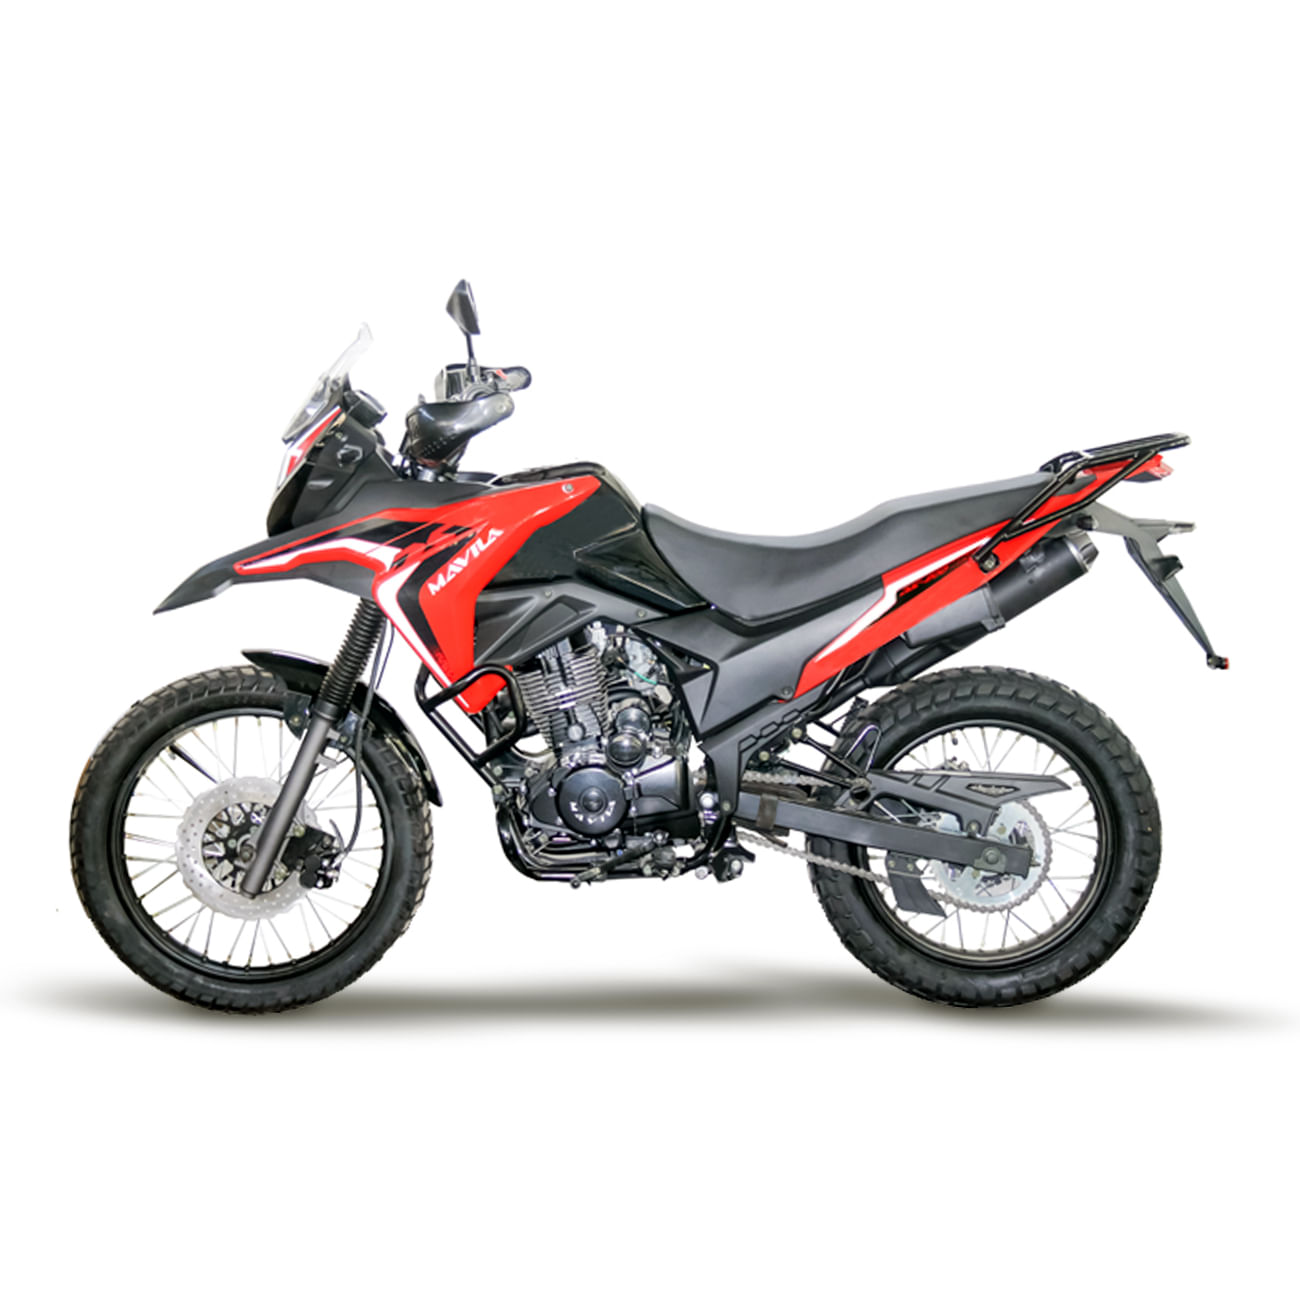 Motocicleta Mavila DS-200 Roja 200 cc